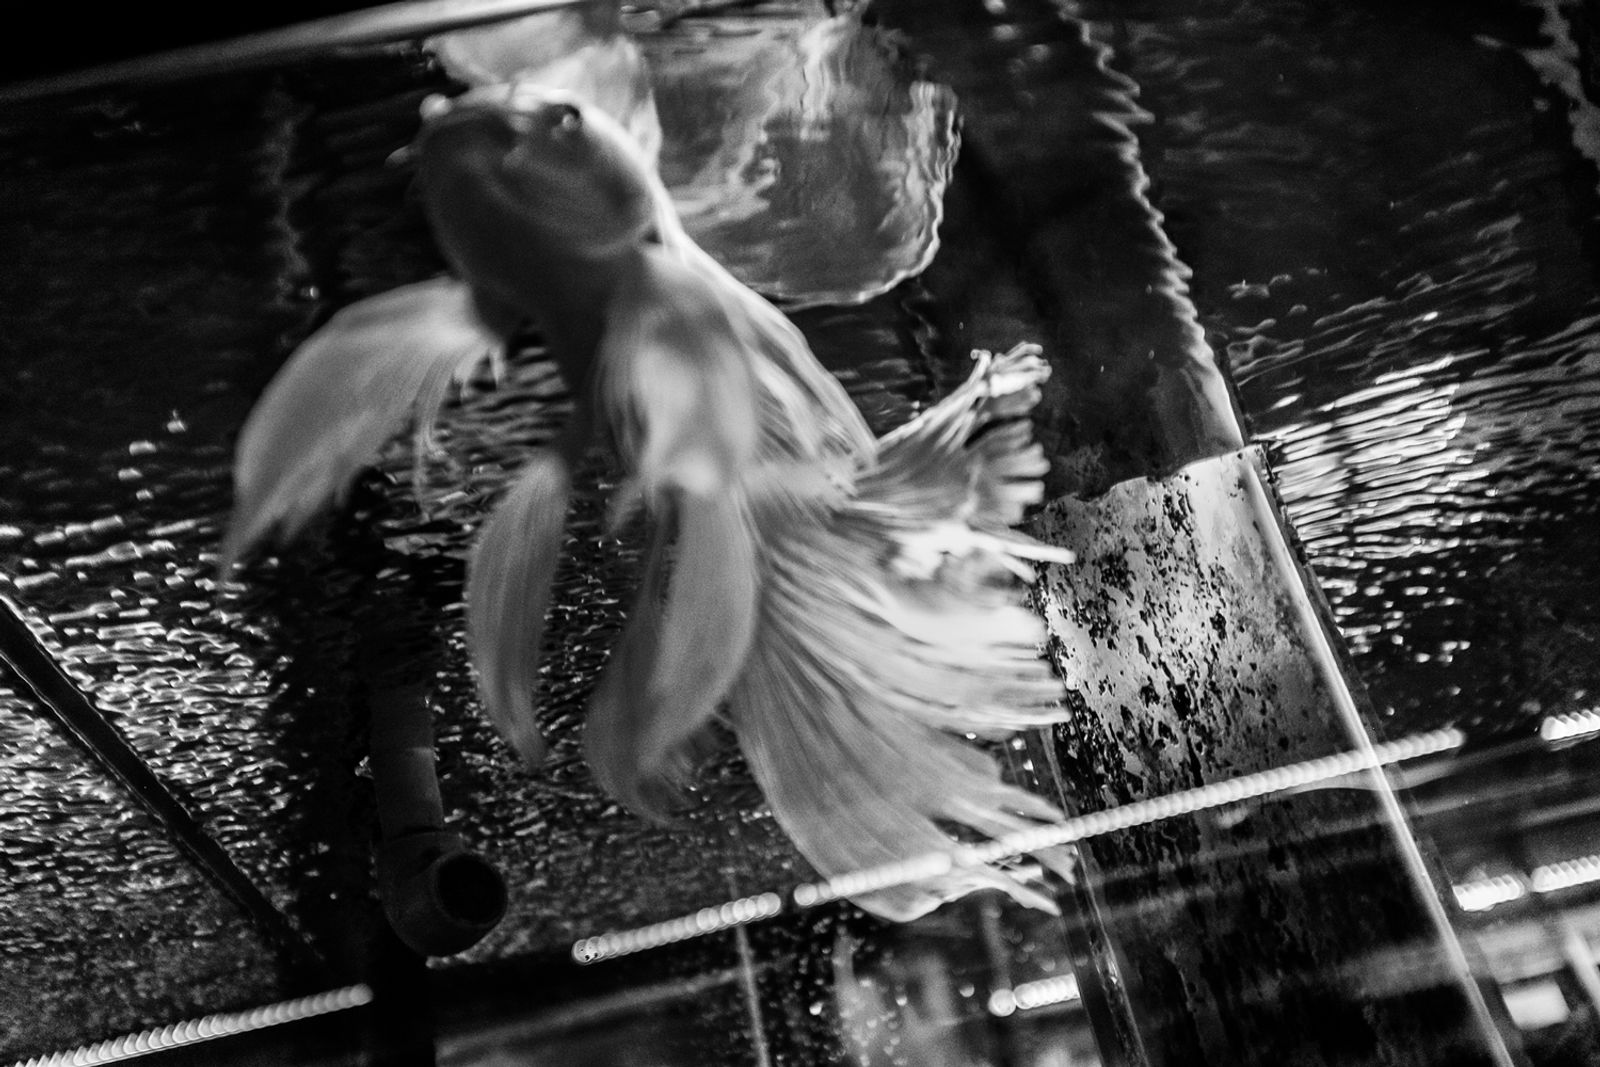 © Farshid Tighehsaz - Feeling of drowning.